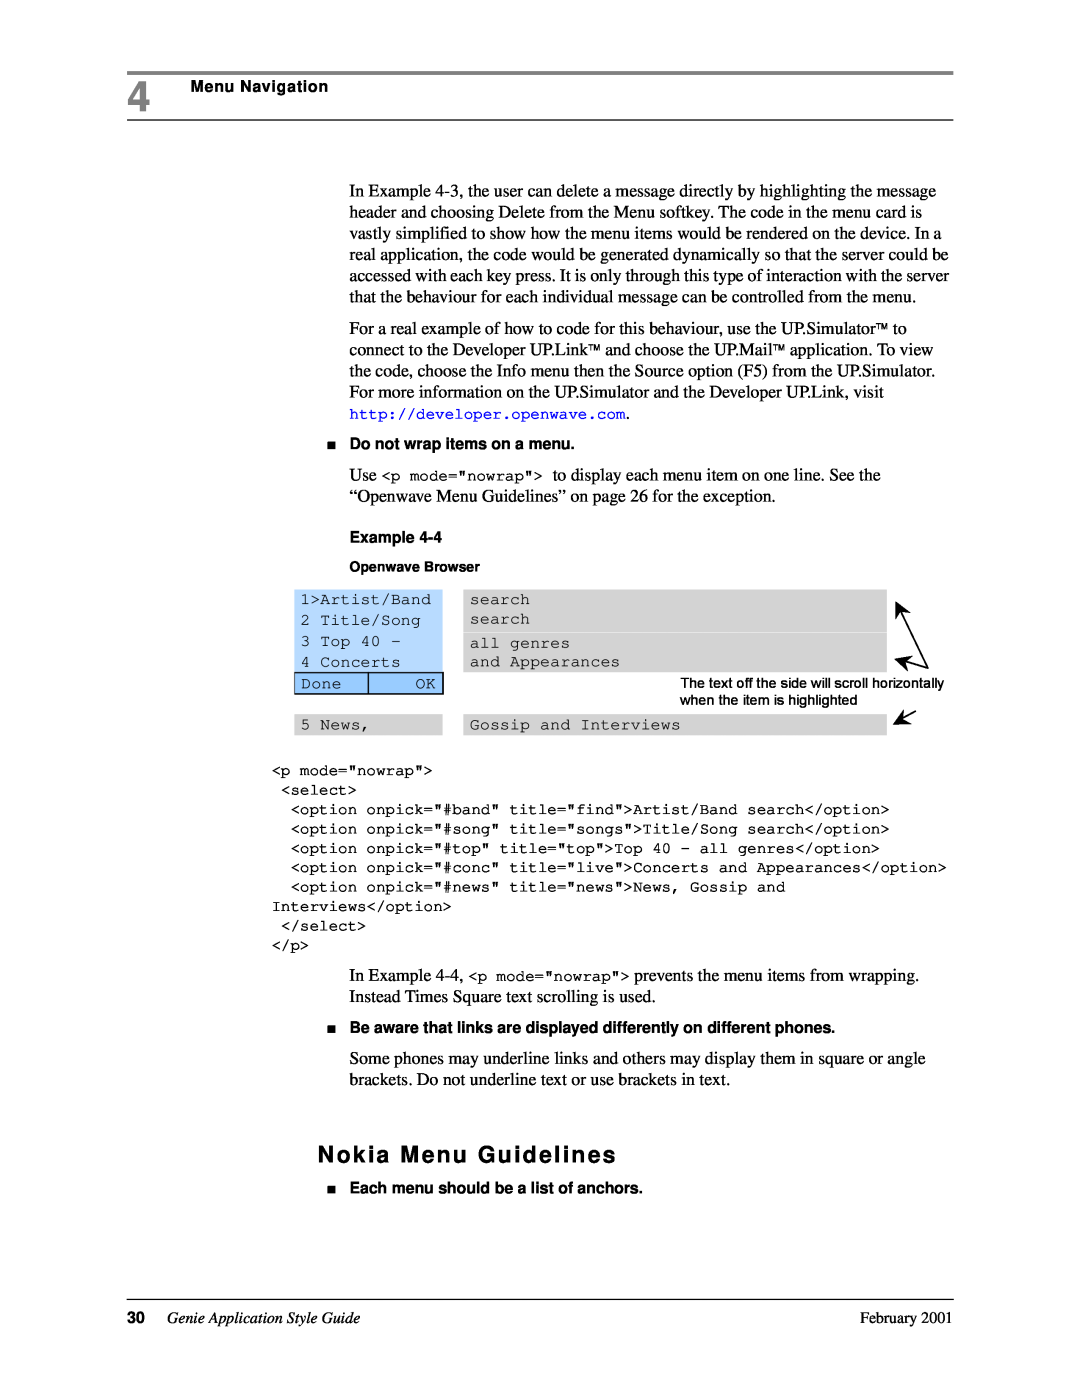 Genie 7110 manual Nokia Menu Guidelines, Genie Application Style Guide 